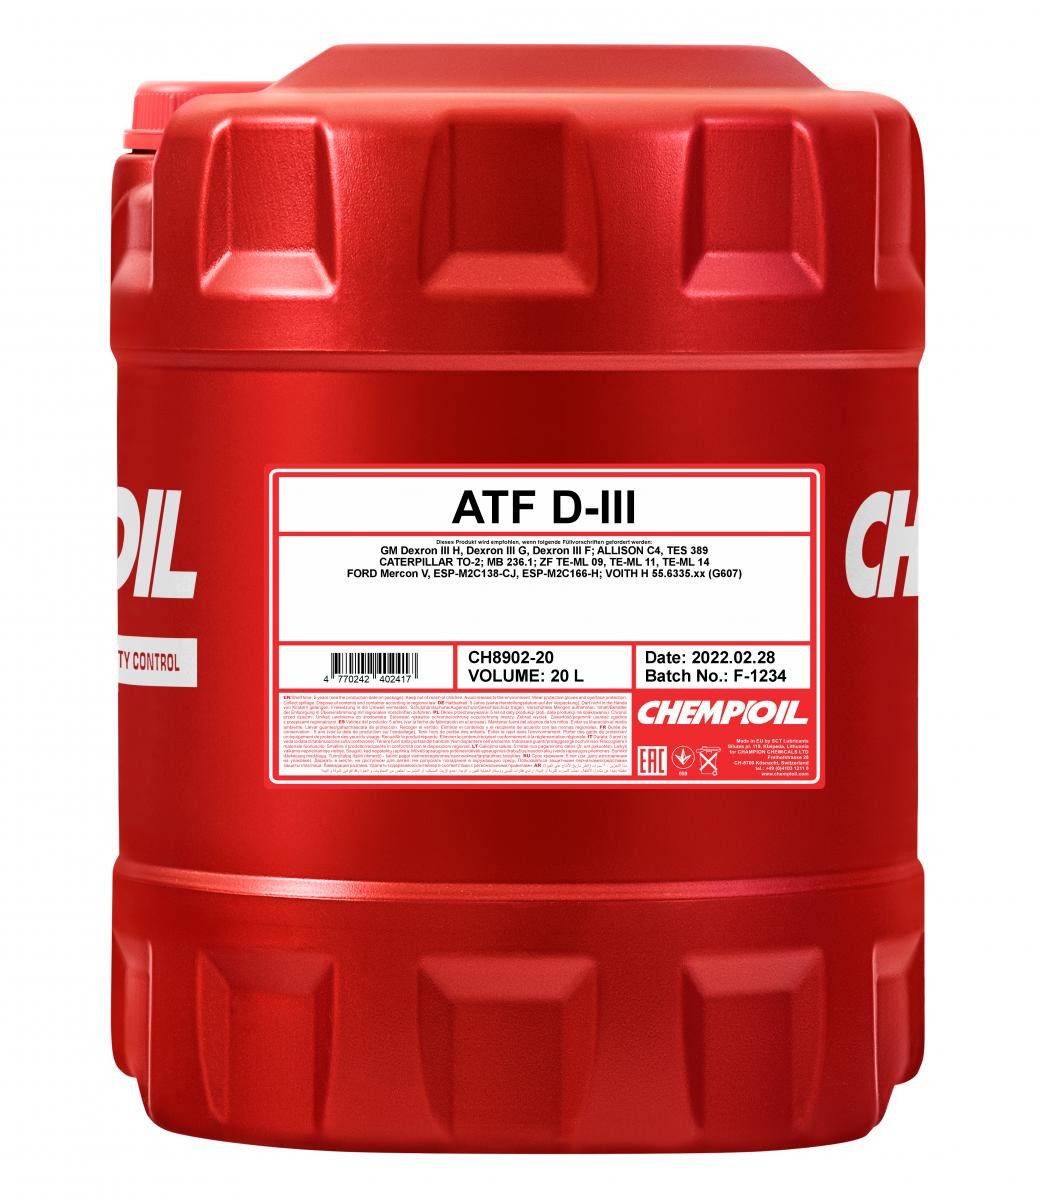 CHEMPIOIL ATF D-III CH8902-20 Hydraulic Oil DexronIIIH